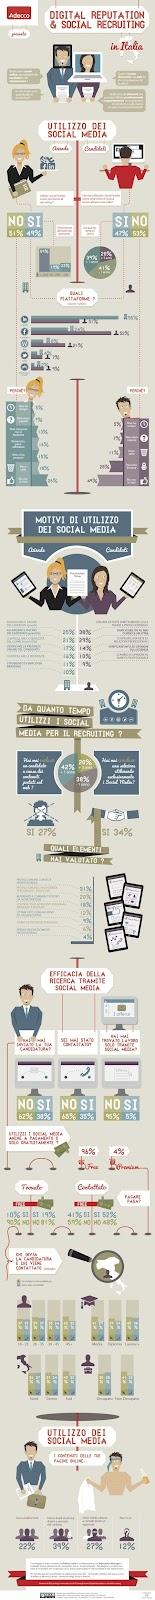 Social Recruiting e Digital Reputation: un'infografica